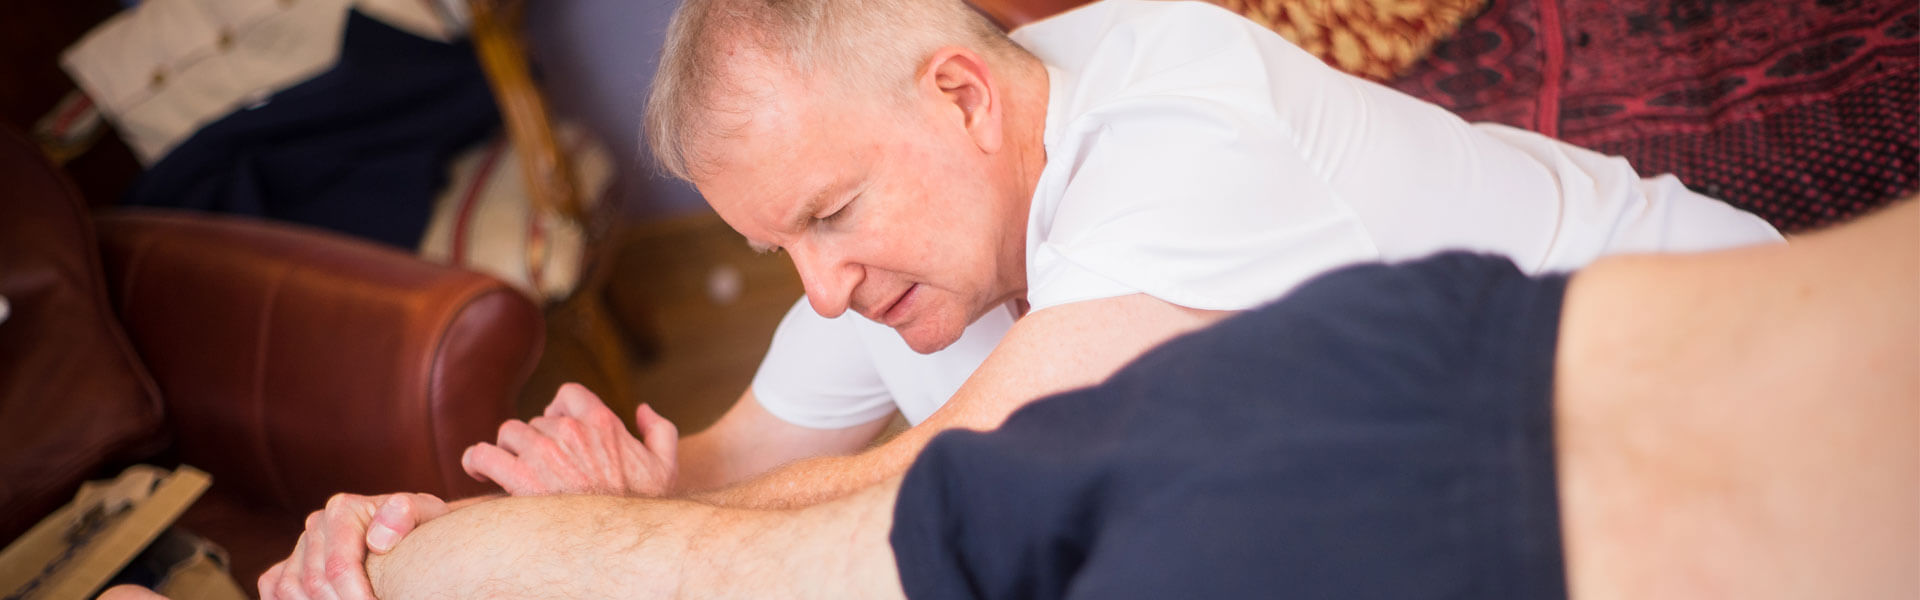 Slider image showing curative massage to leg